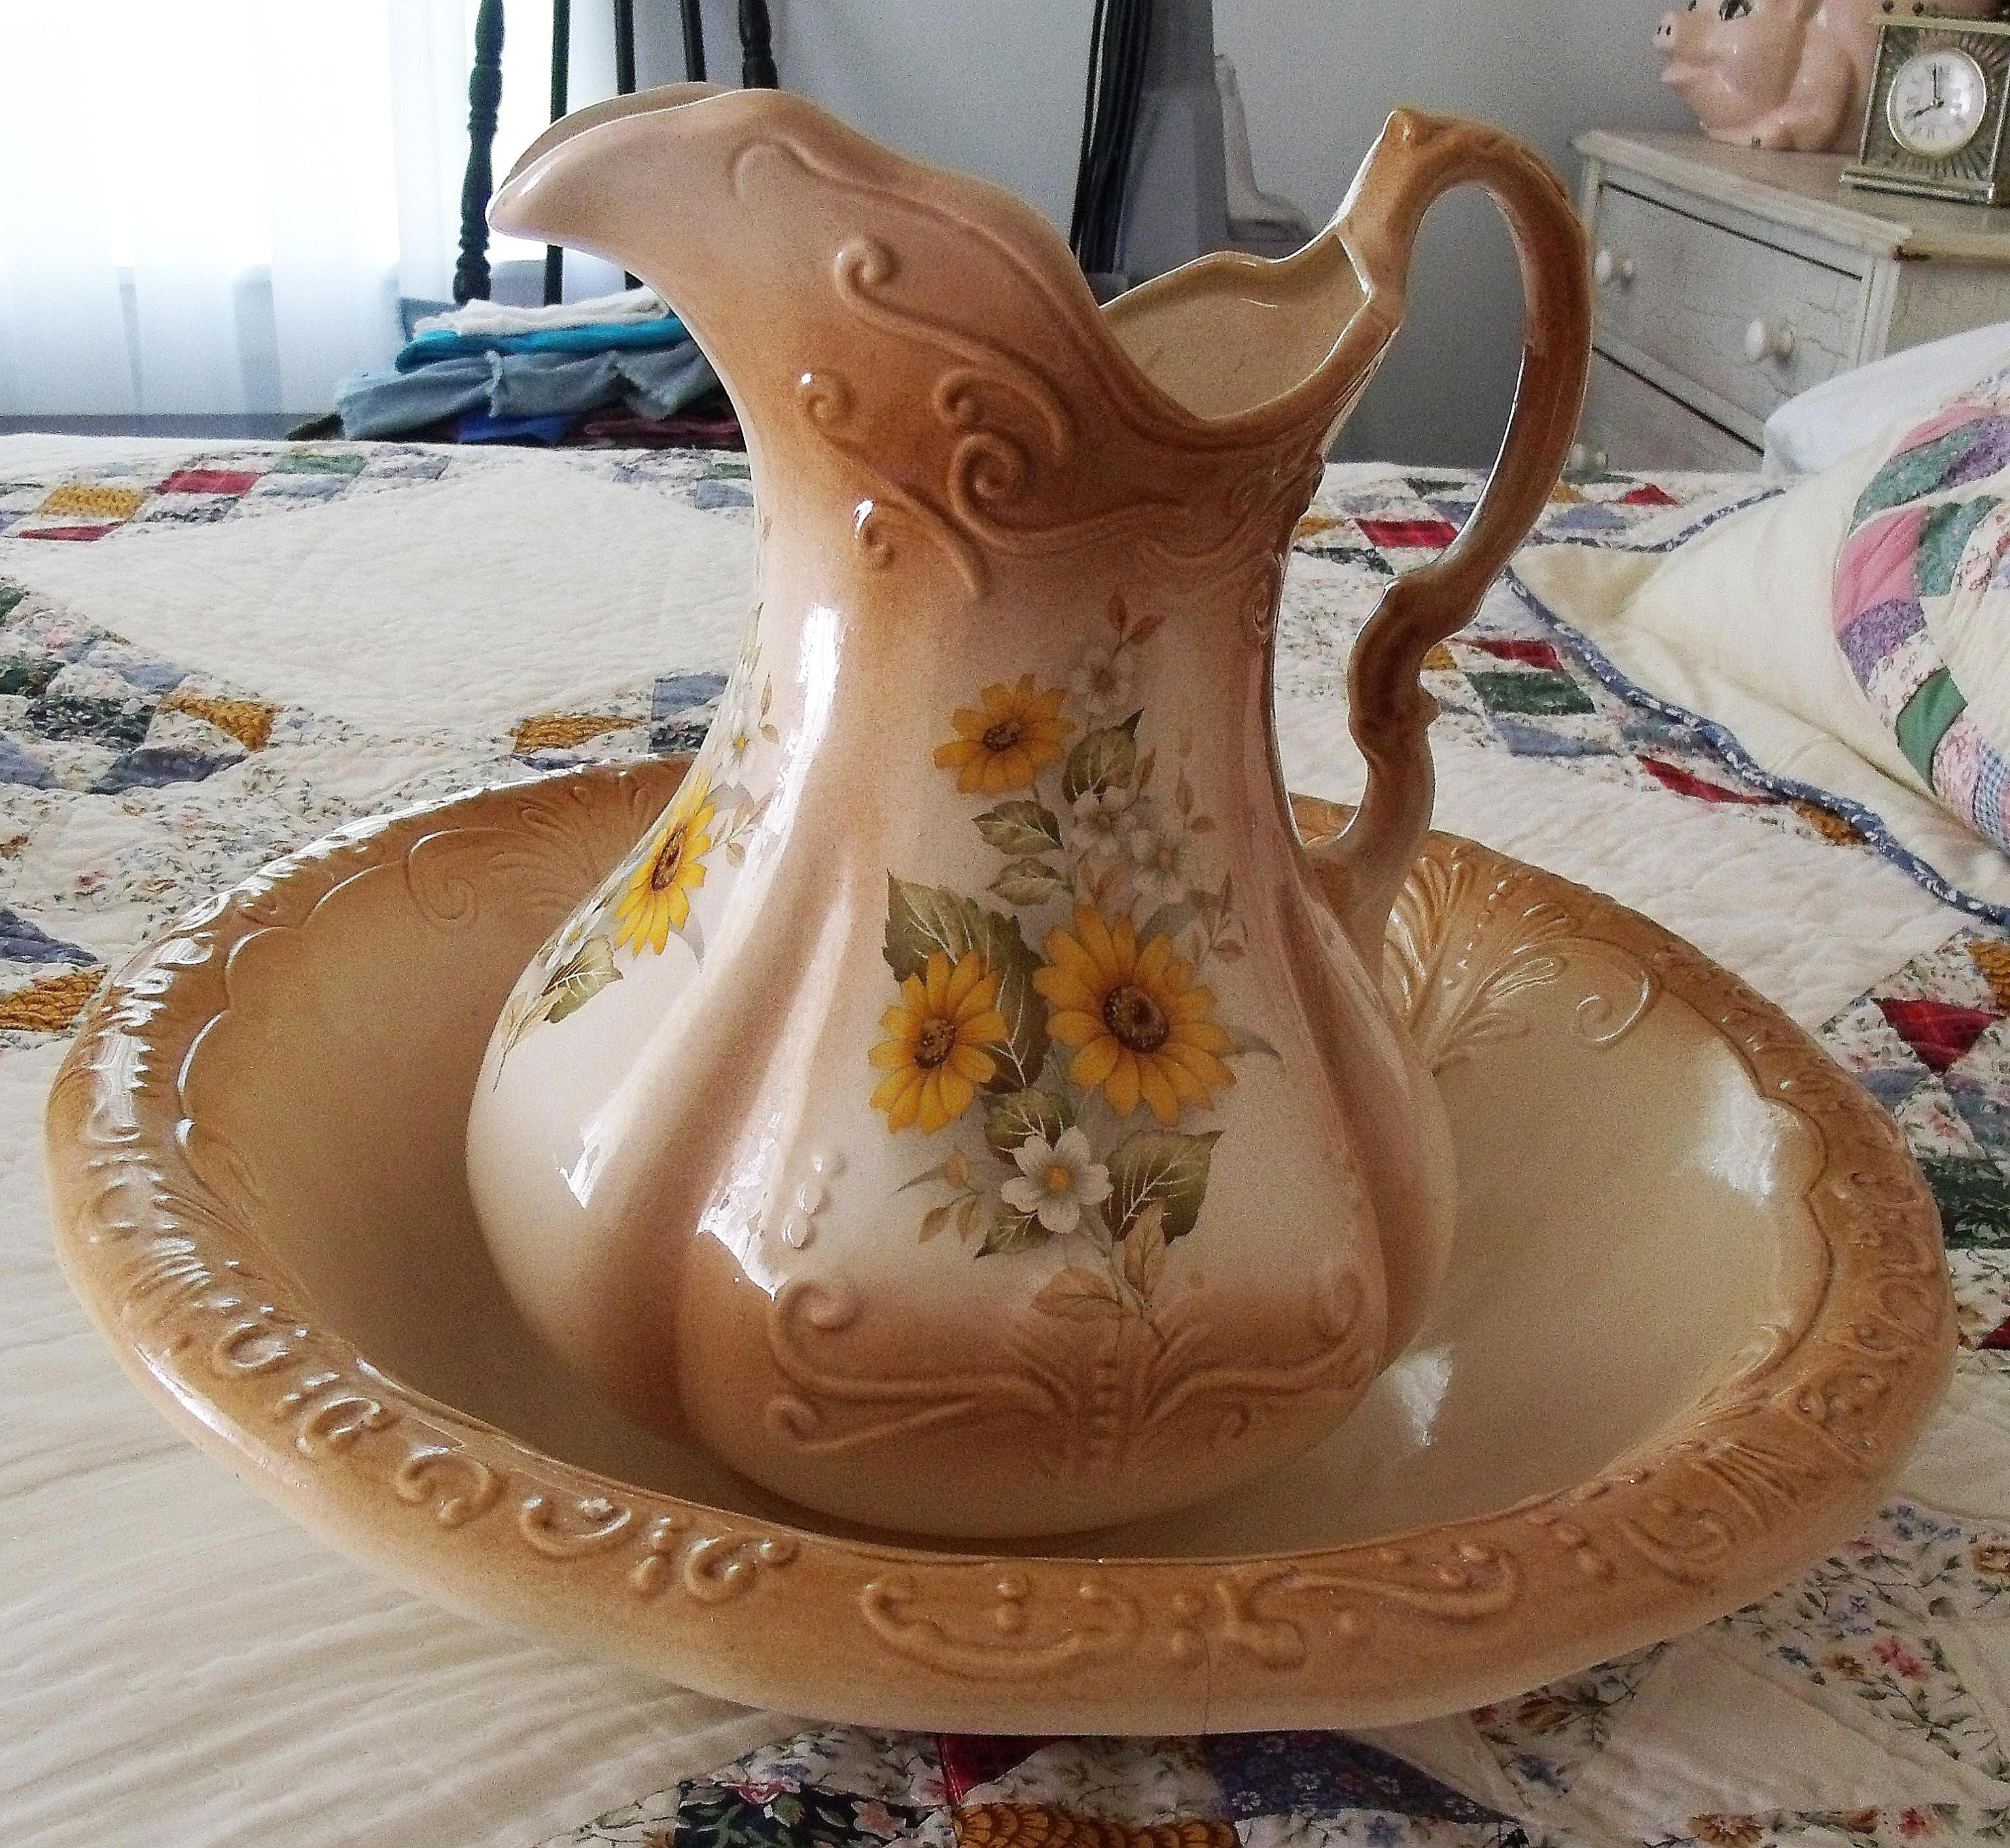 vintage roseville pottery vases of spotting r s prussia porcelain reproductions regarding rsprepropitcher 589d19a05f9b58819c98c5e6 jpg